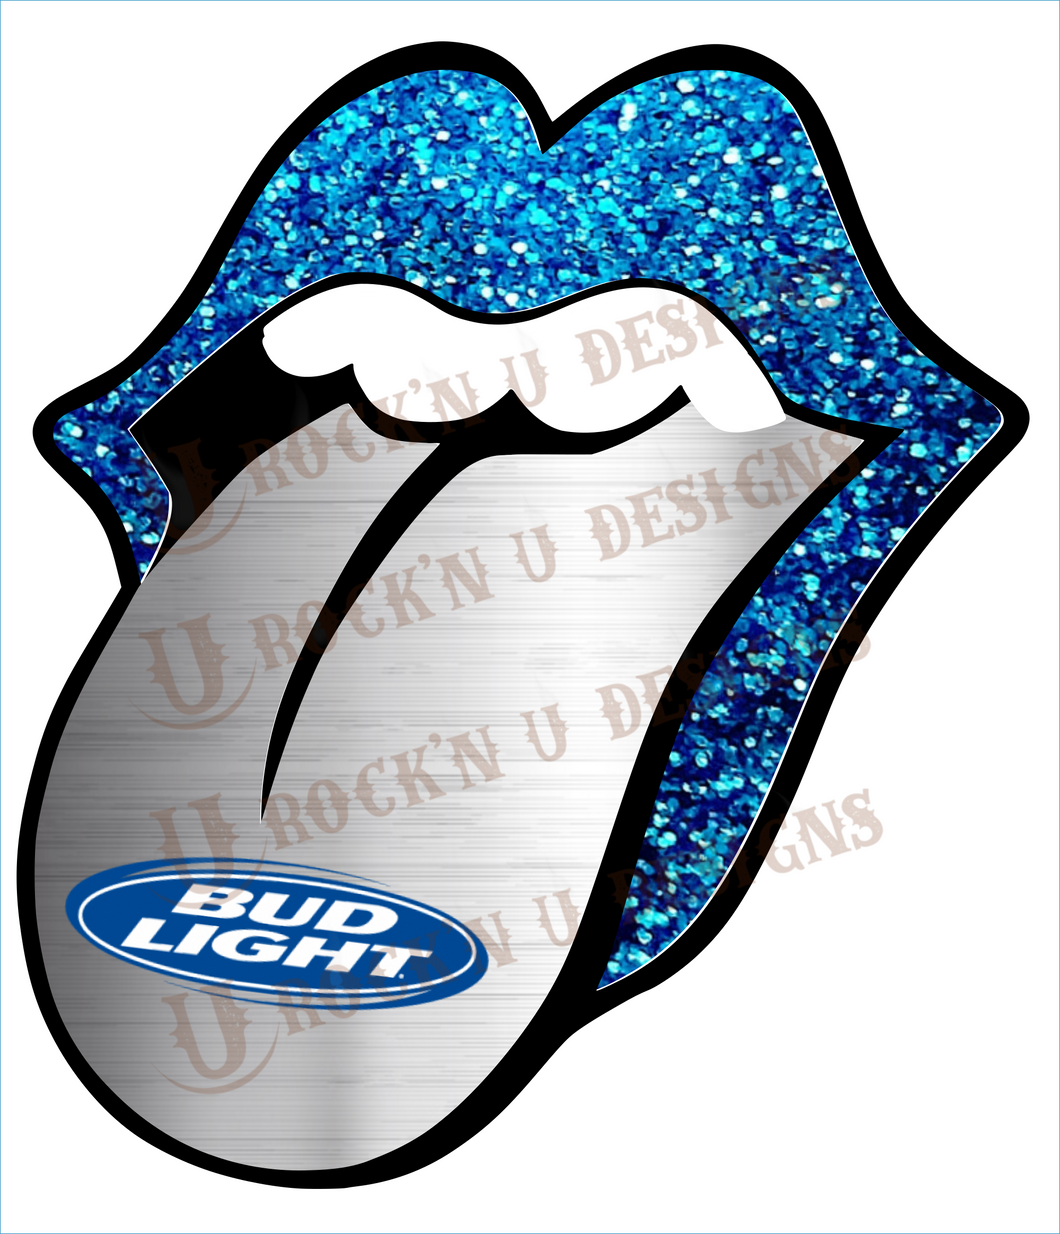 Bud Mouth Sublimation Transfer By Rock'n U Designs